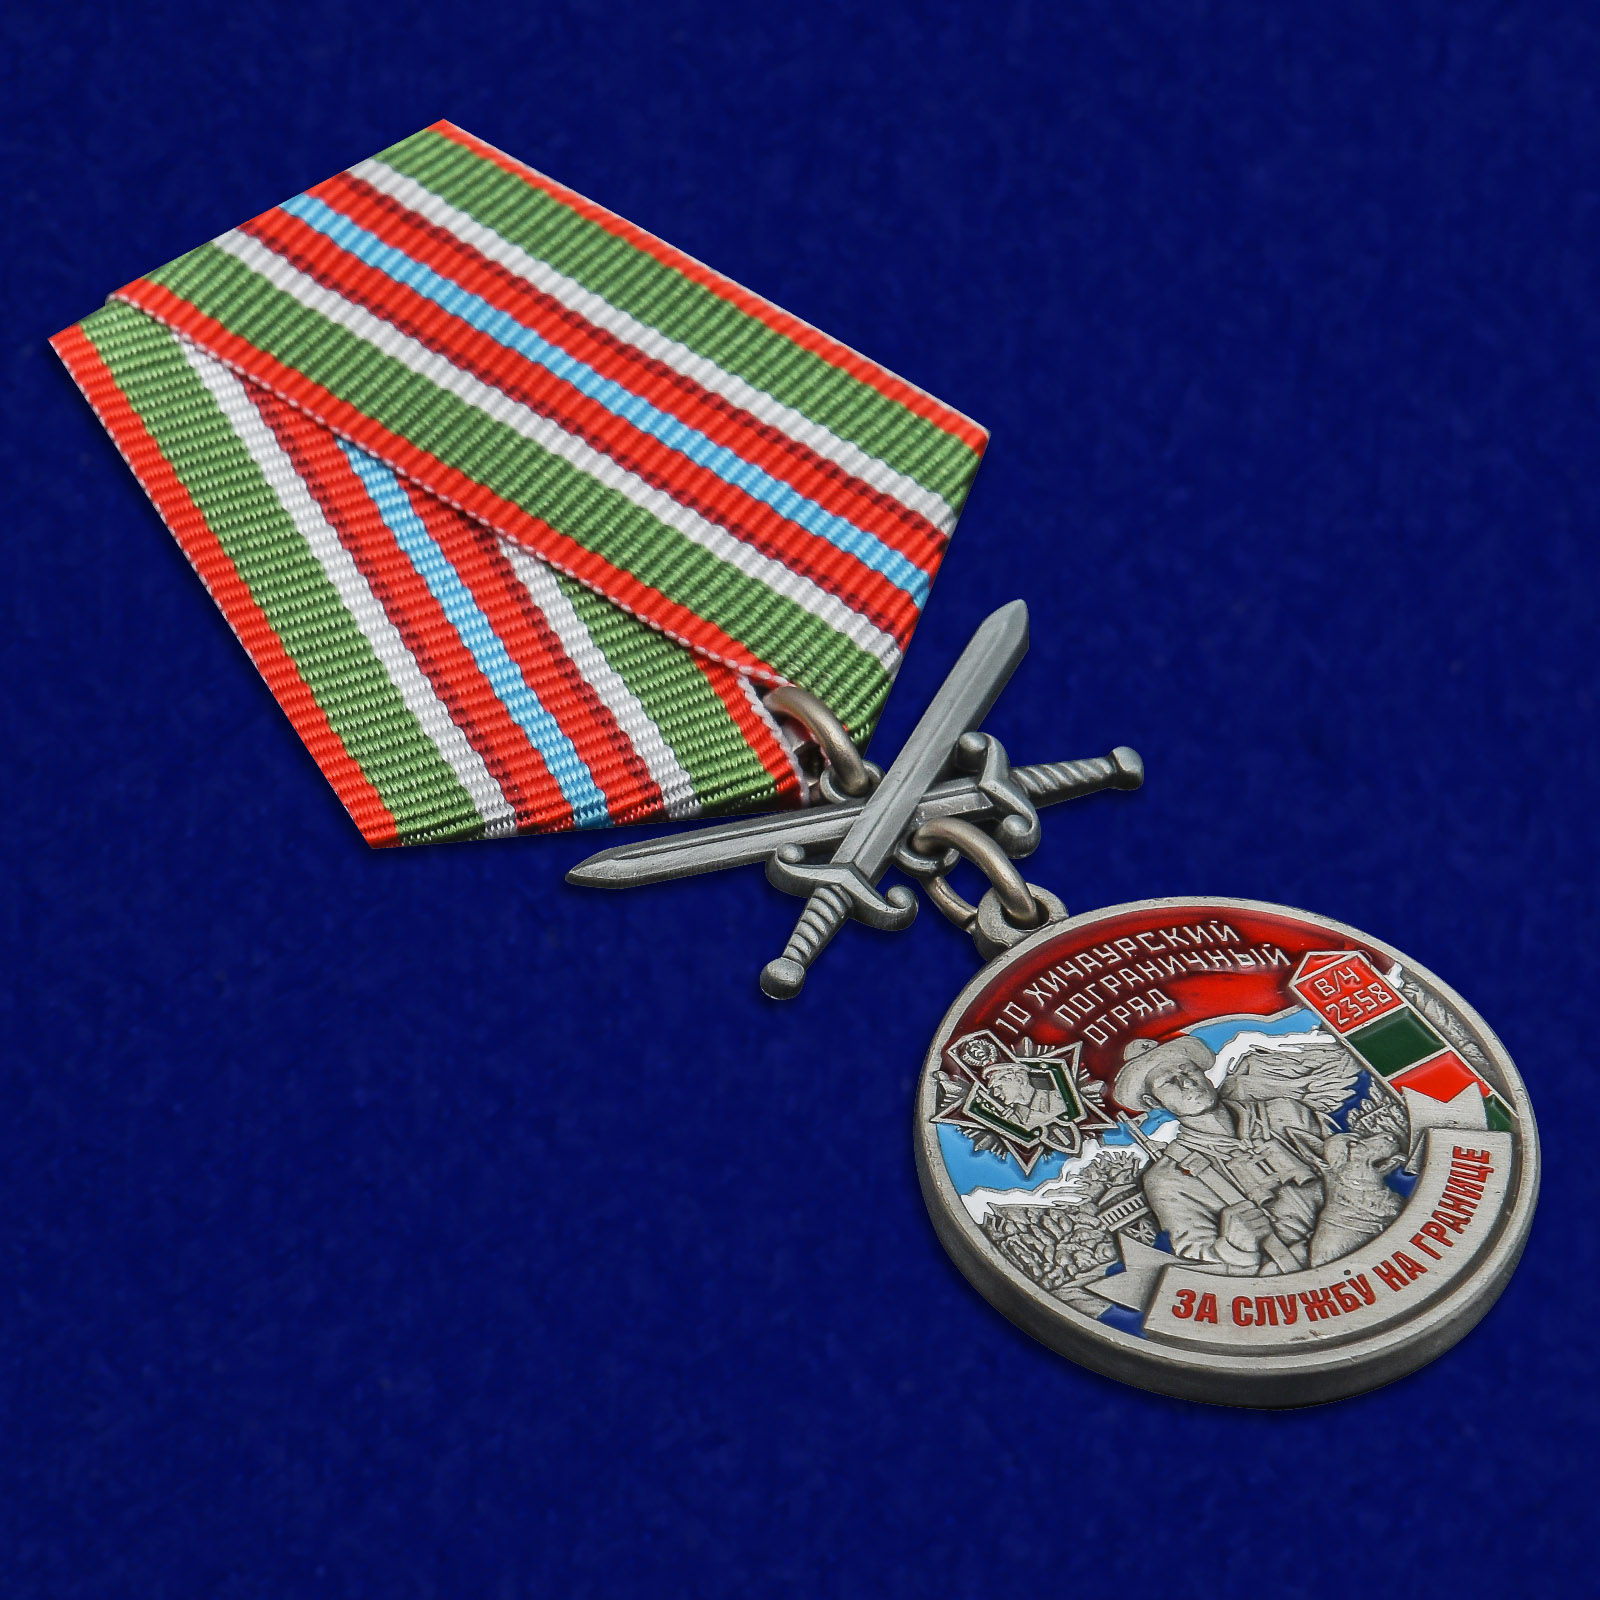 Купить медаль "За службу на границе" (10 Хичаурский ПогО)